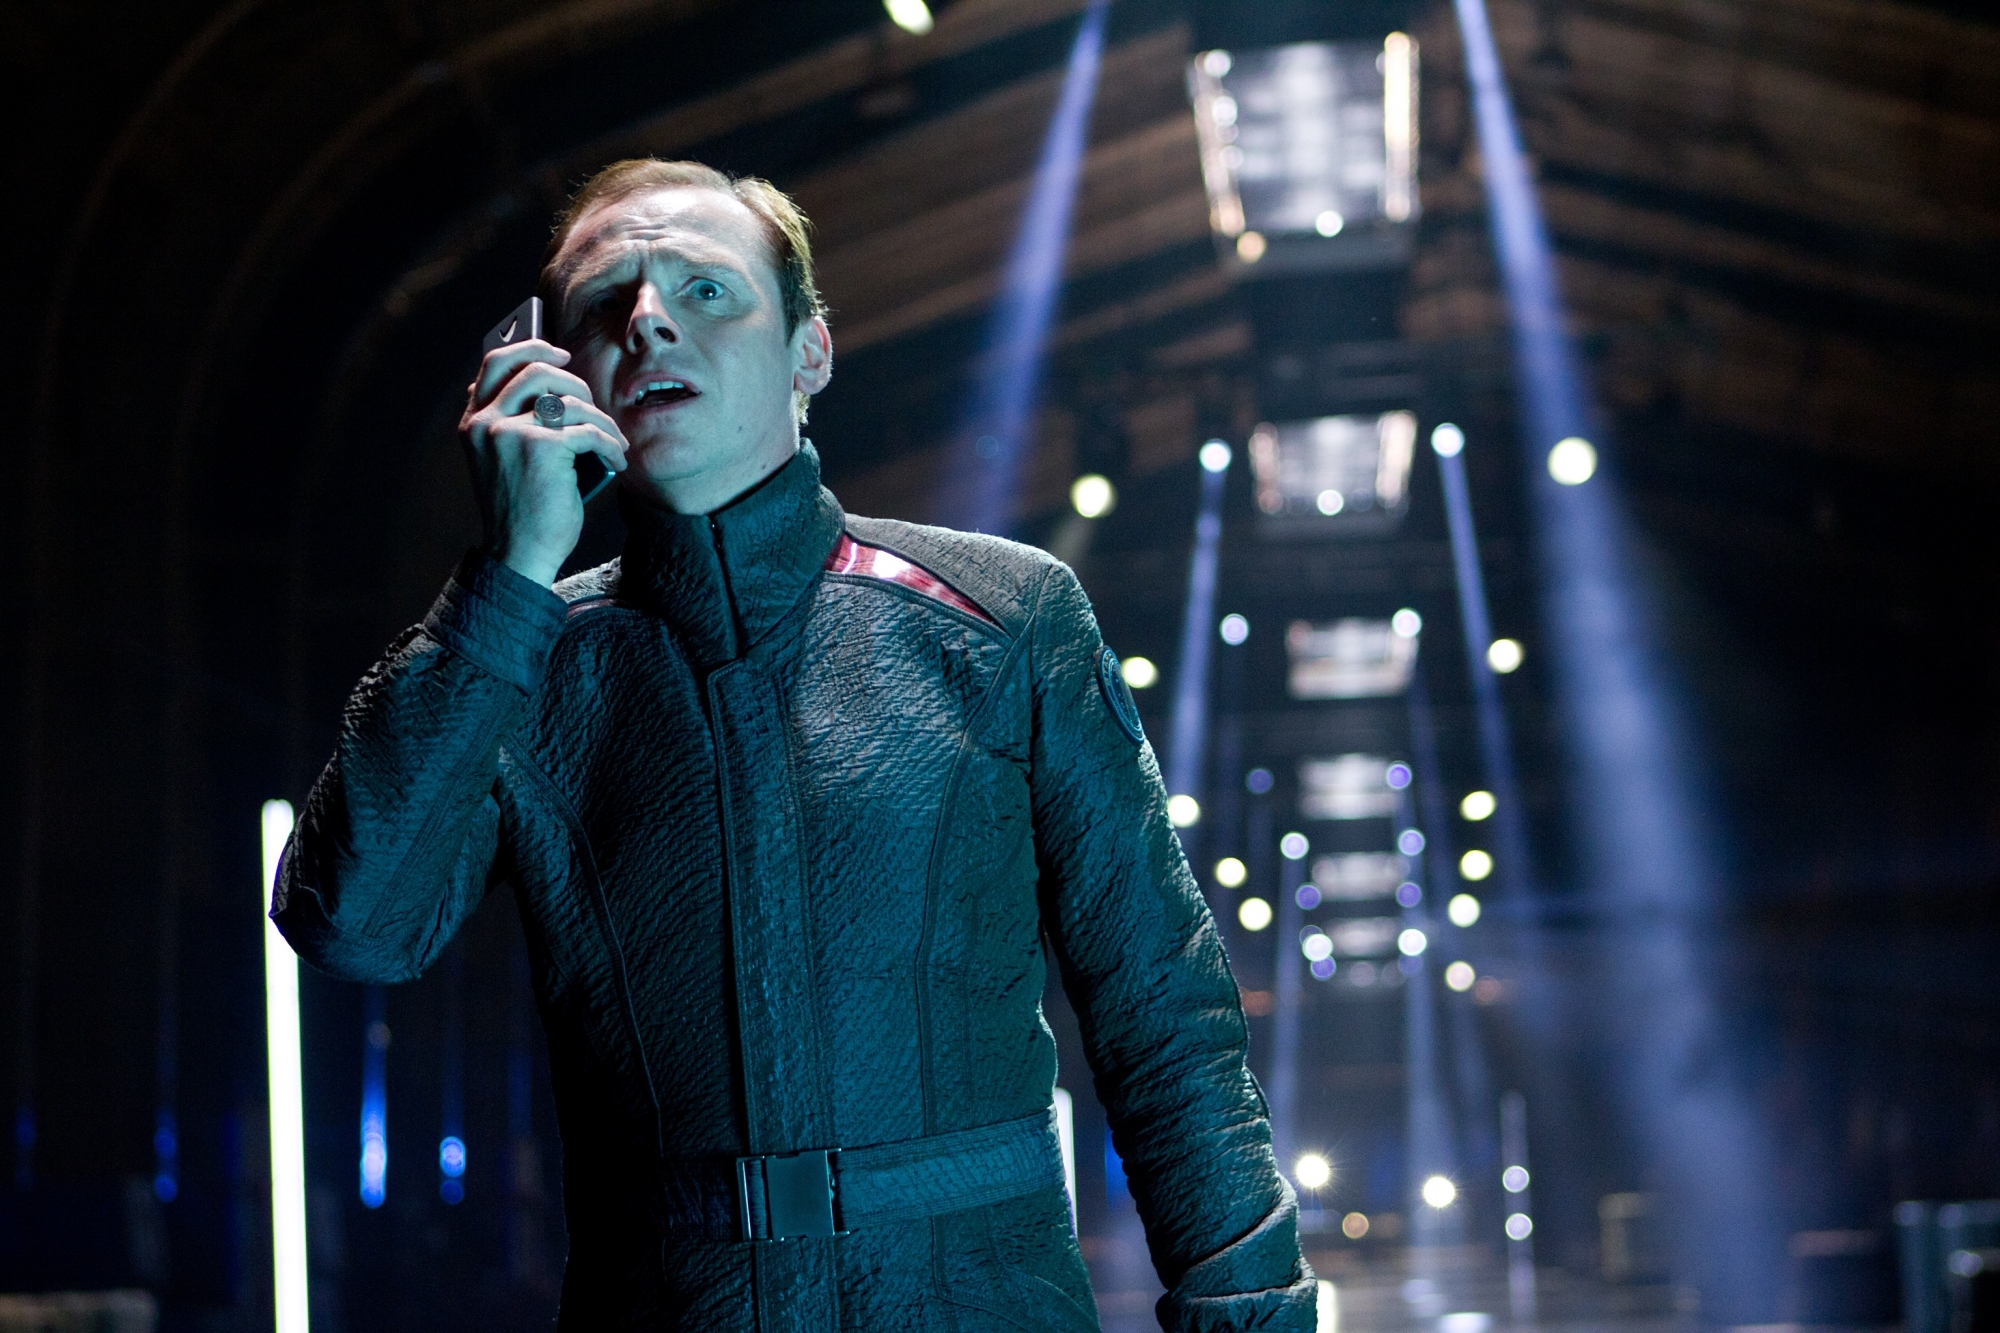 Simon Pegg as "Scotty" in [i]Star Trek: Into Darkness[/i]